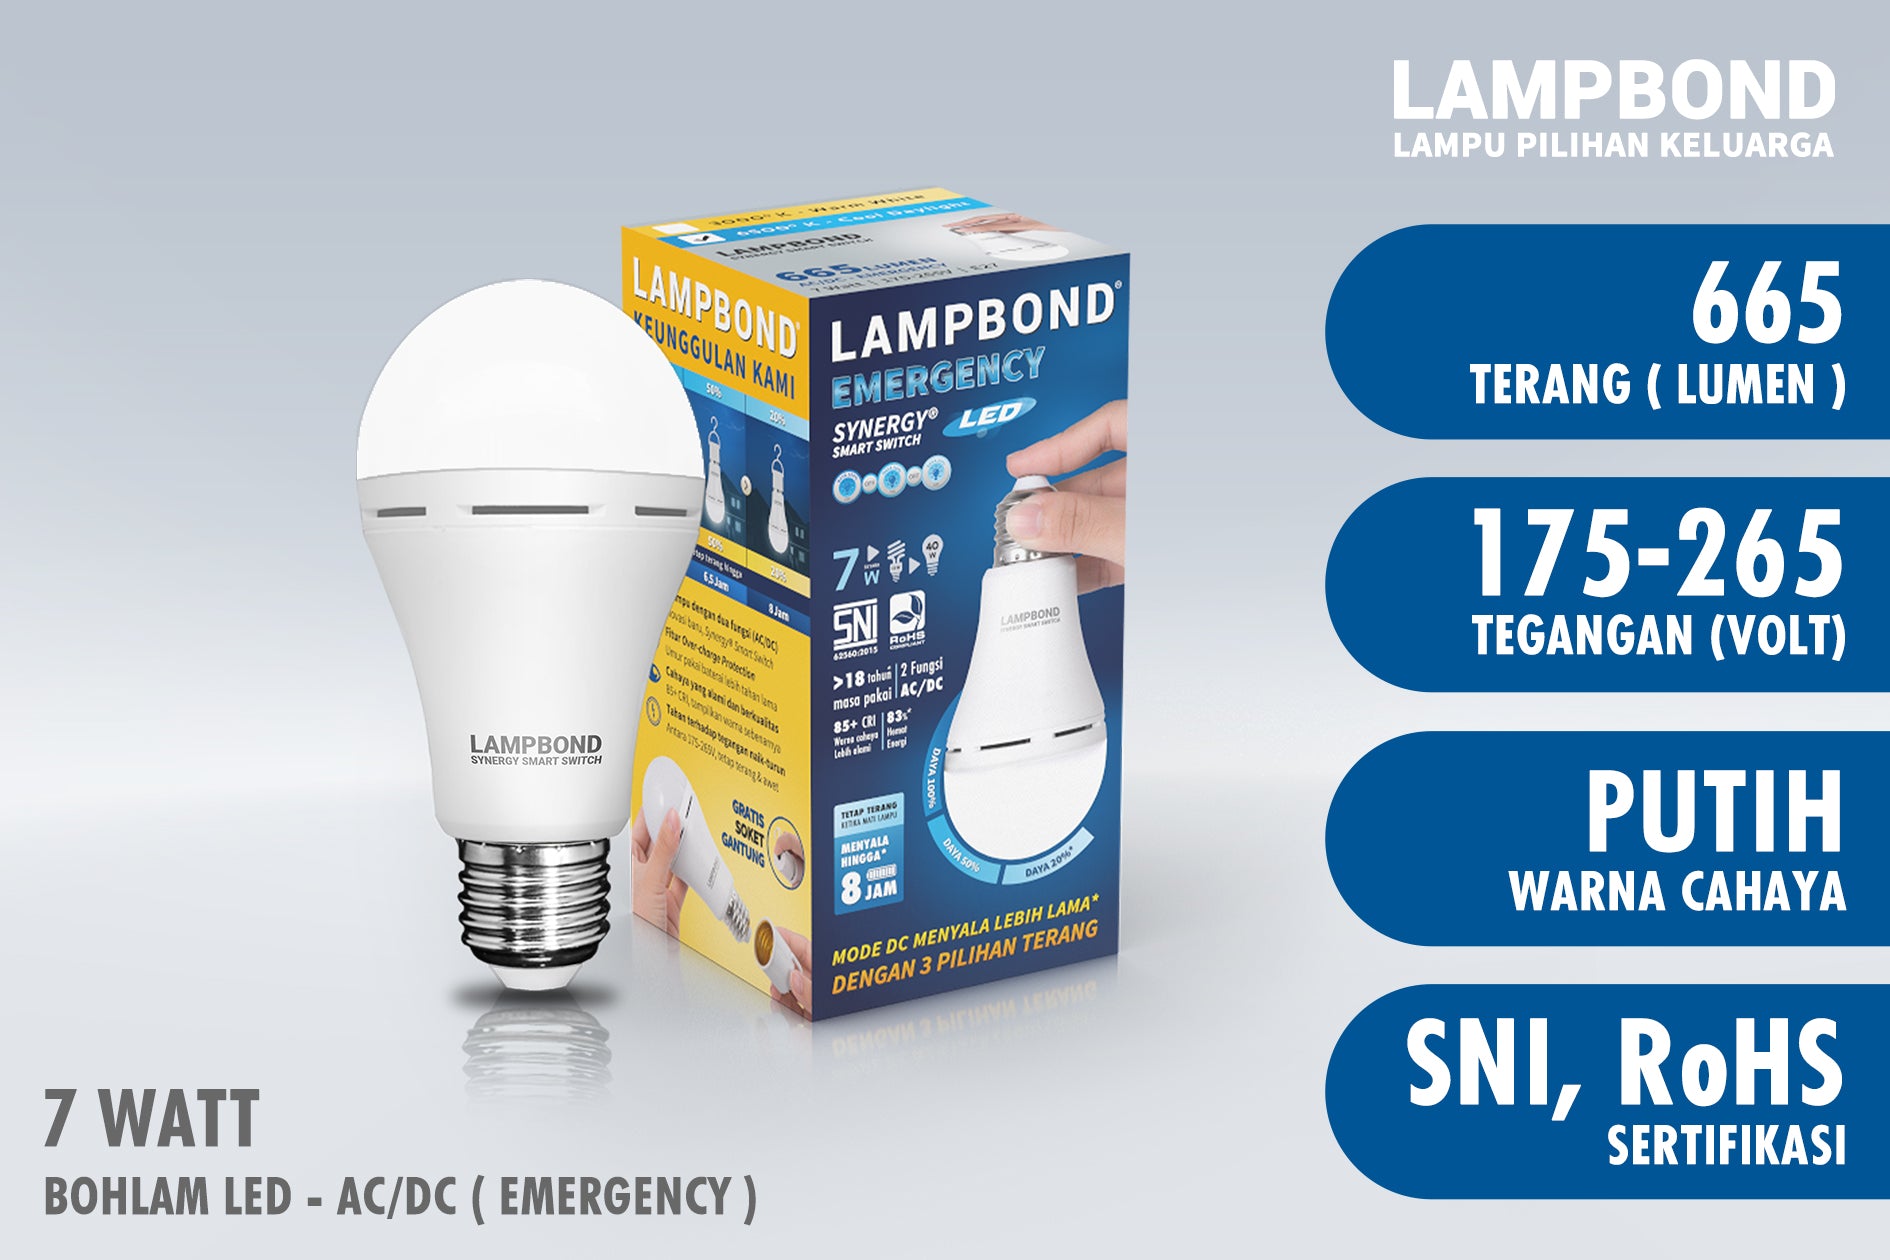 lampu bohlam led emergency 7 watt cool daylight lampbond